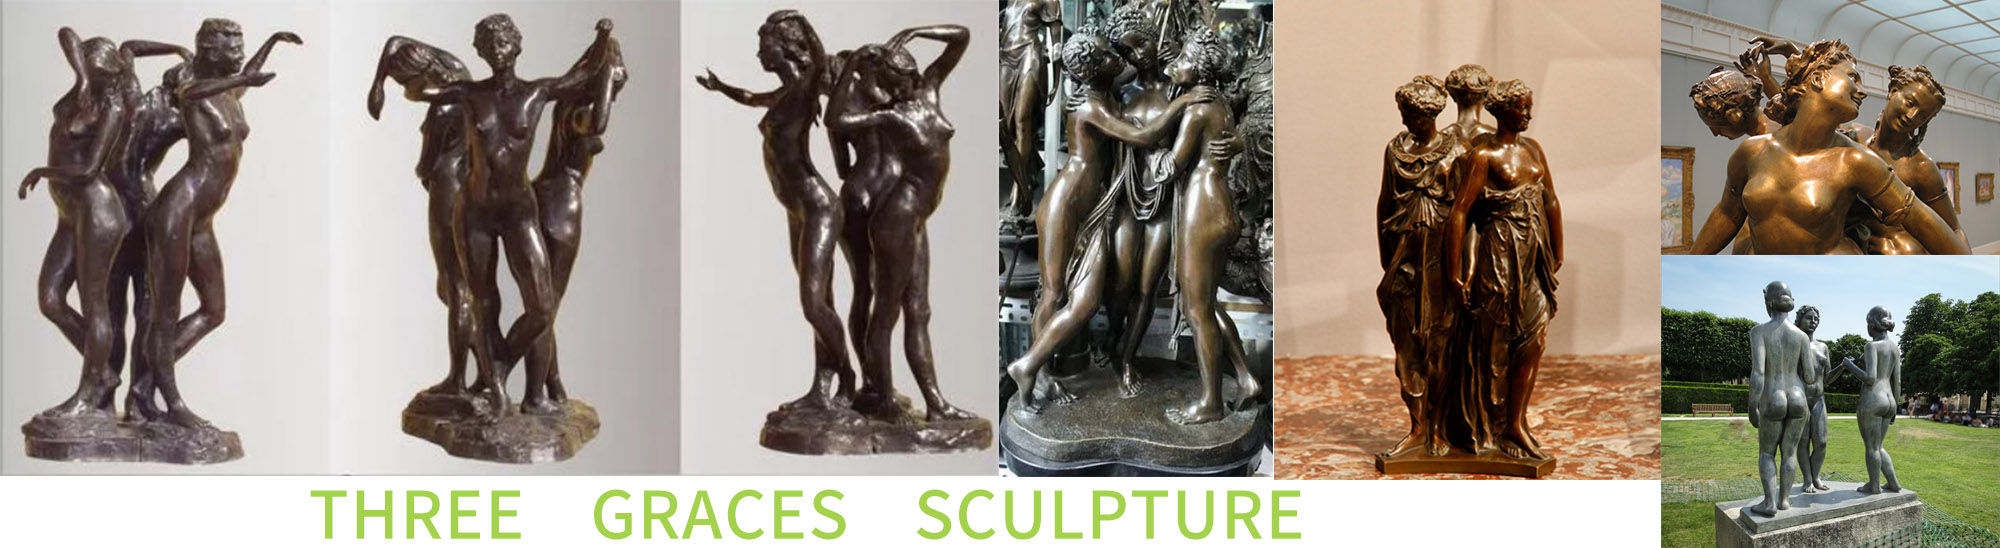 three graces sculpture